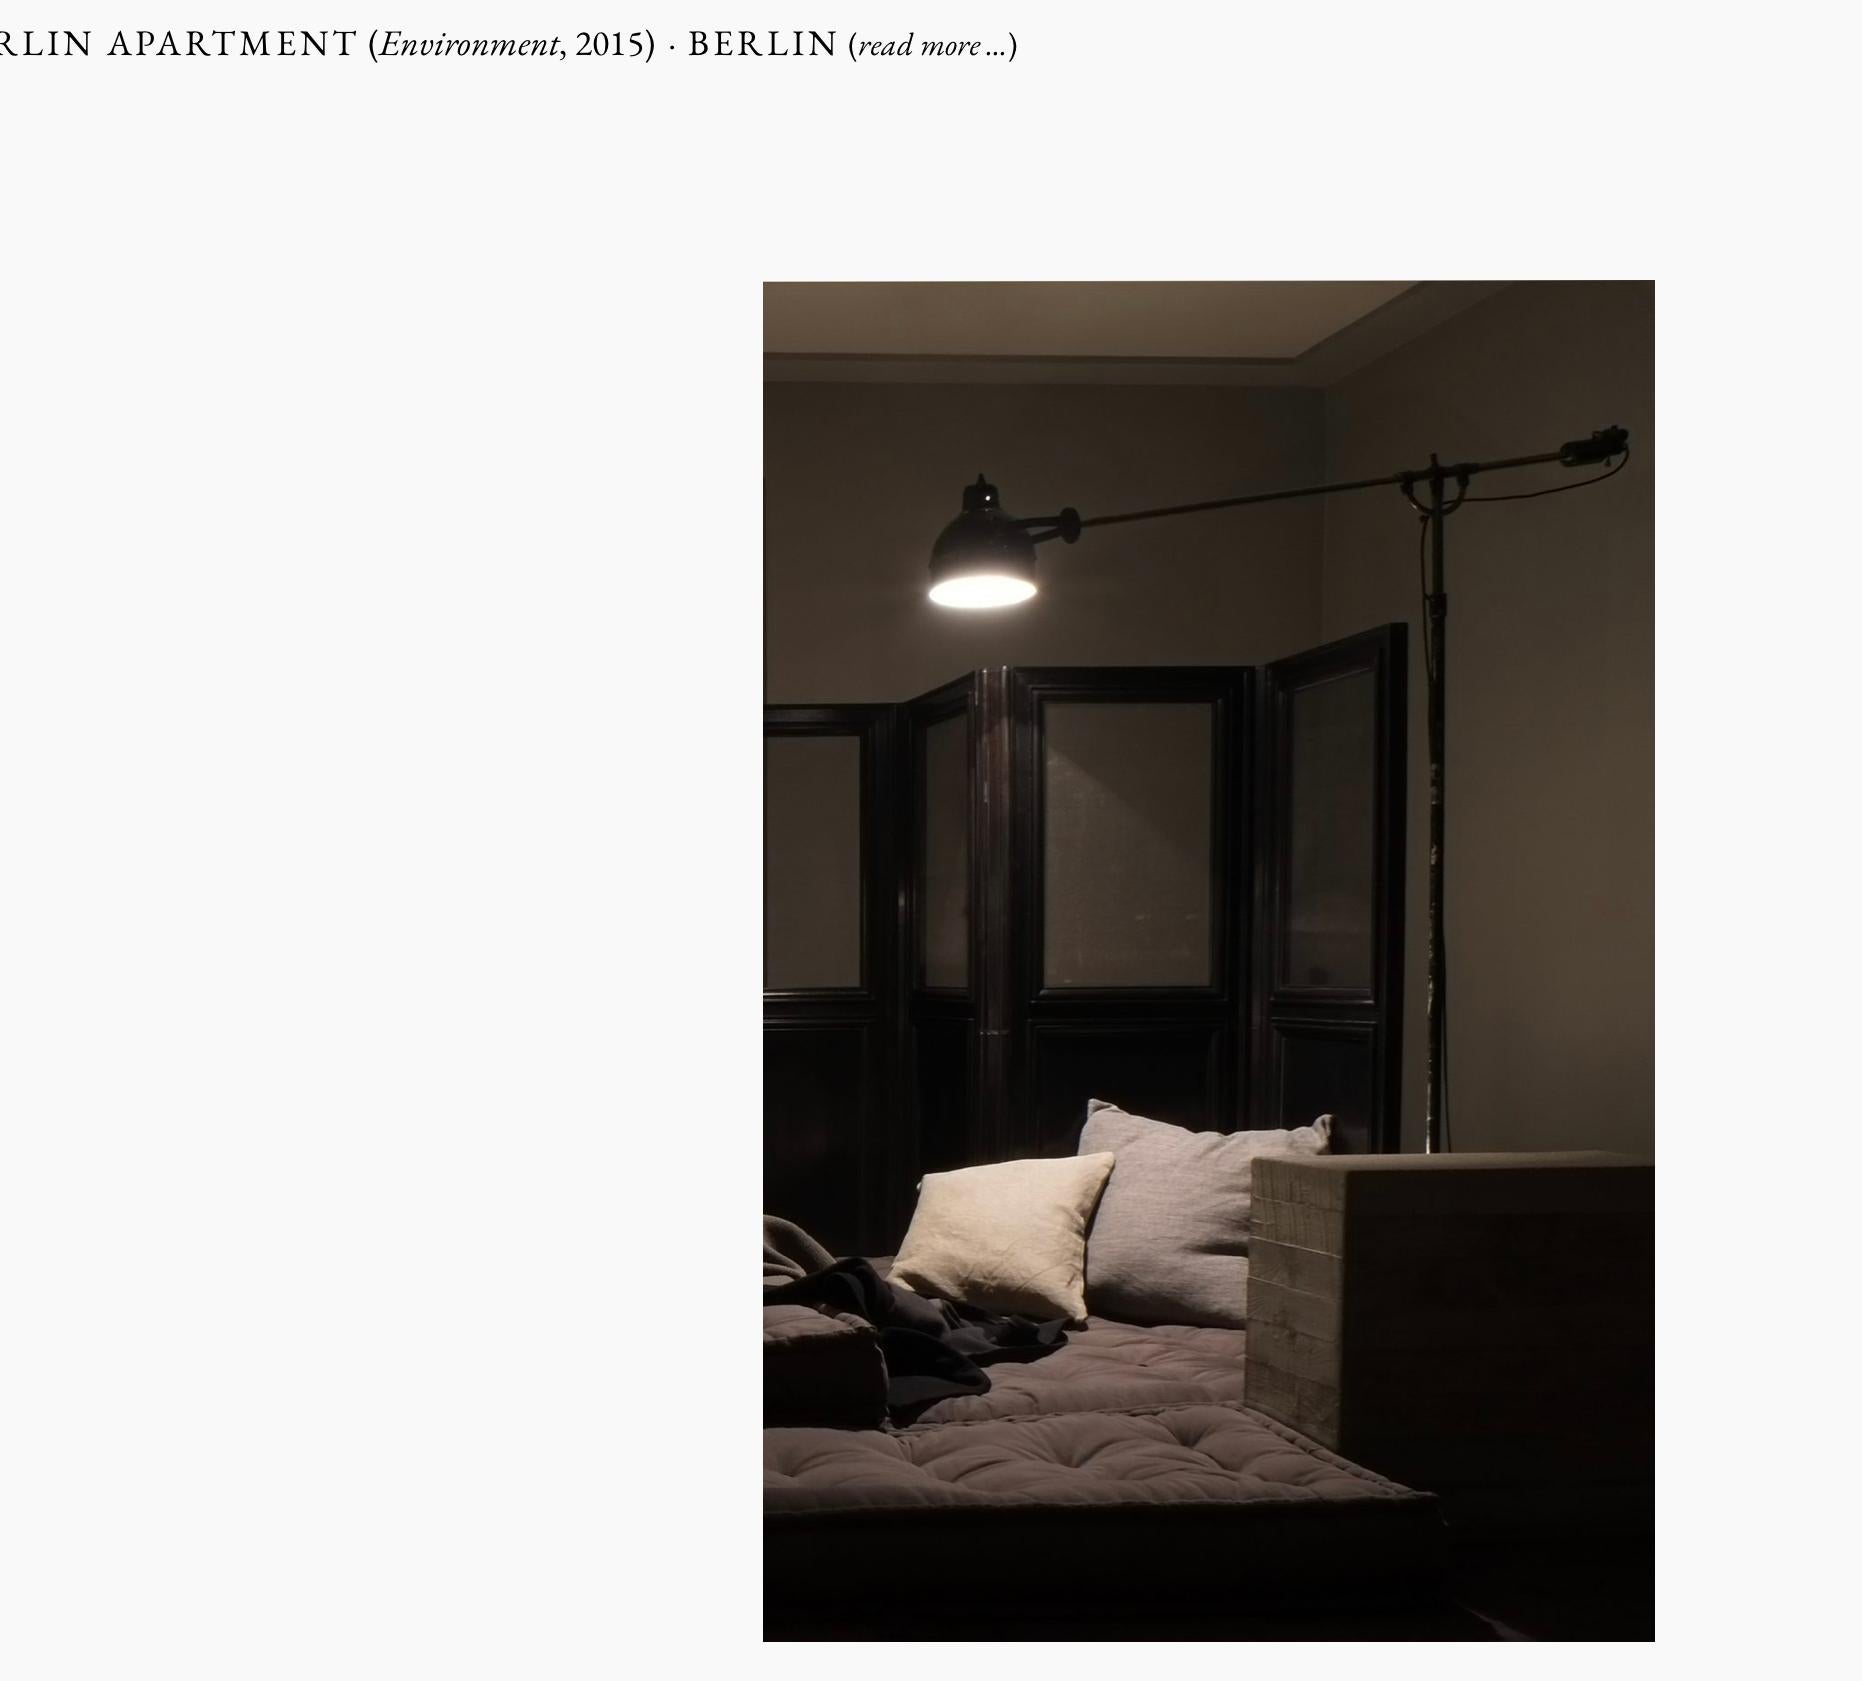 Contemporary Jamesplumb Berlin Apartment Modular Seating Art Installation Sectional Sofa 2015